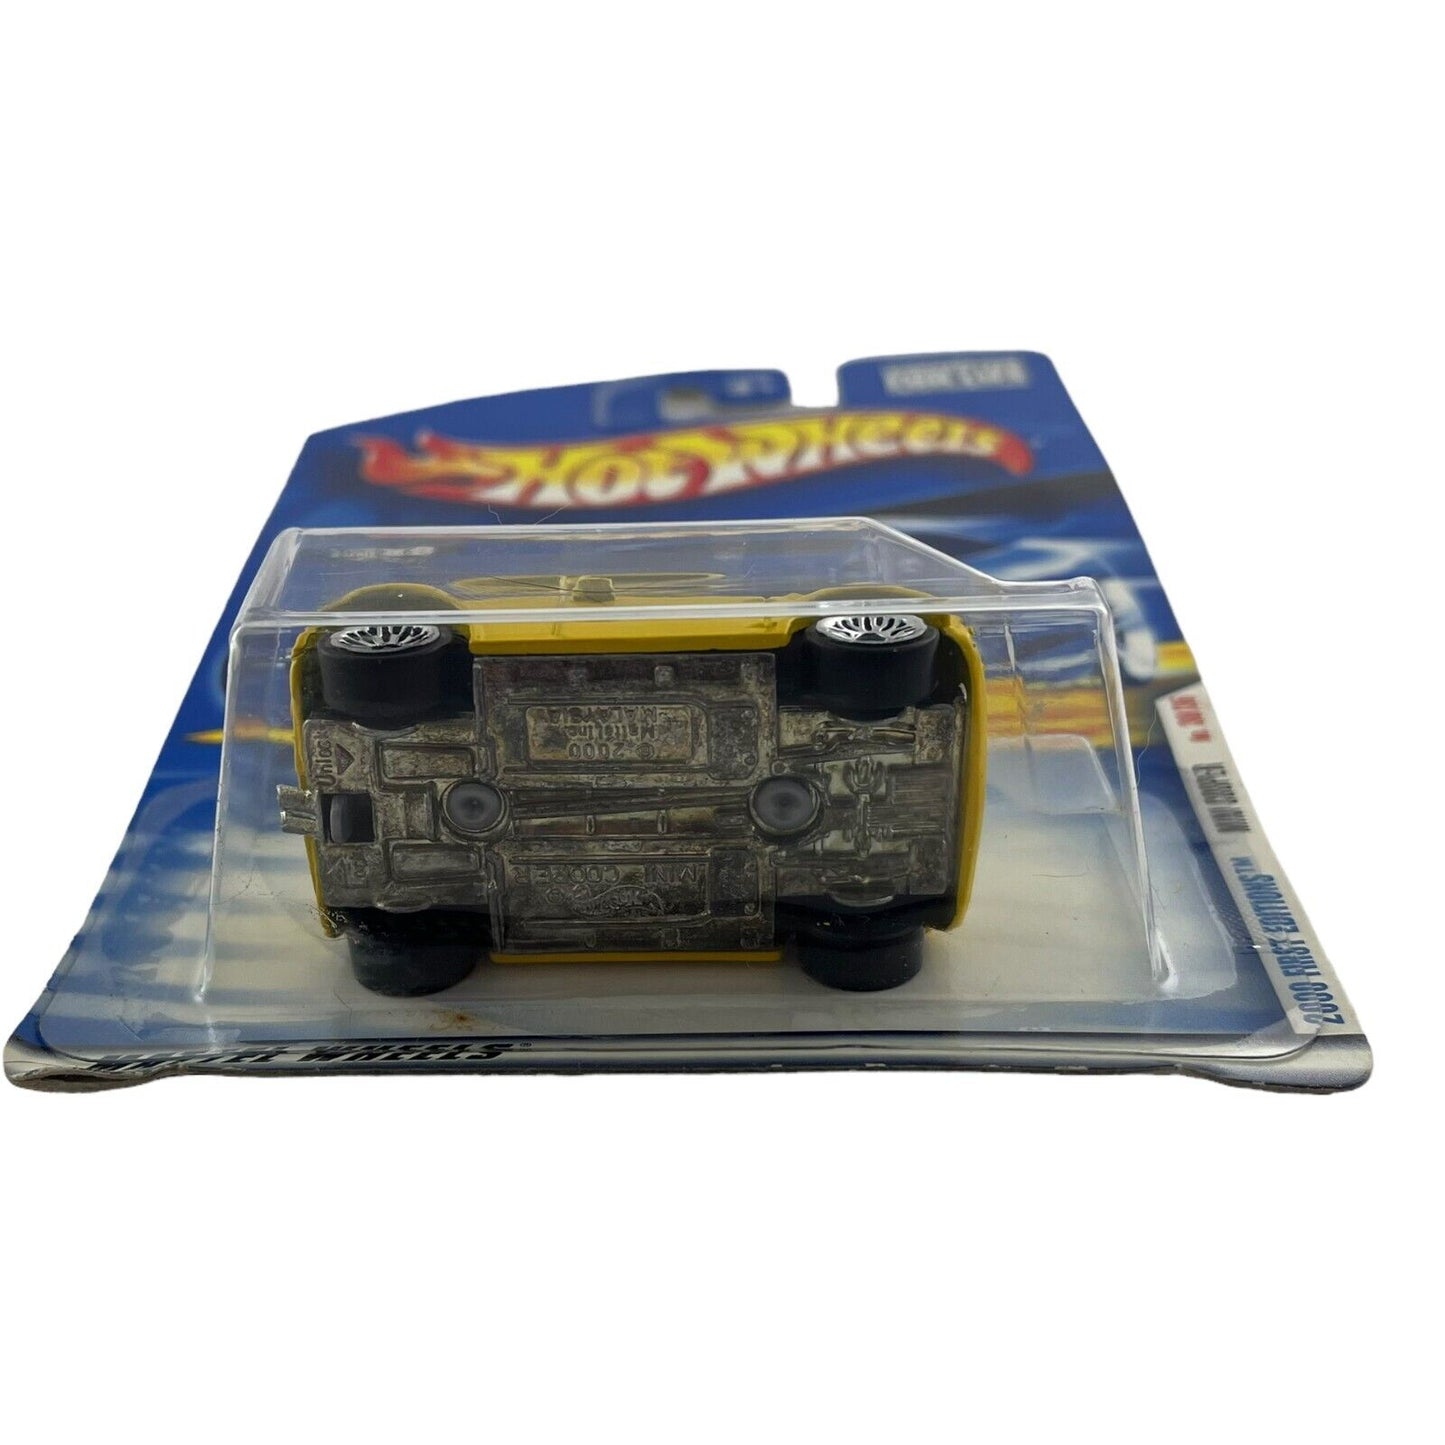 Hot Wheels 2000 First Editions Yellow Mini Cooper #90 Diecast Vehicle Mattel